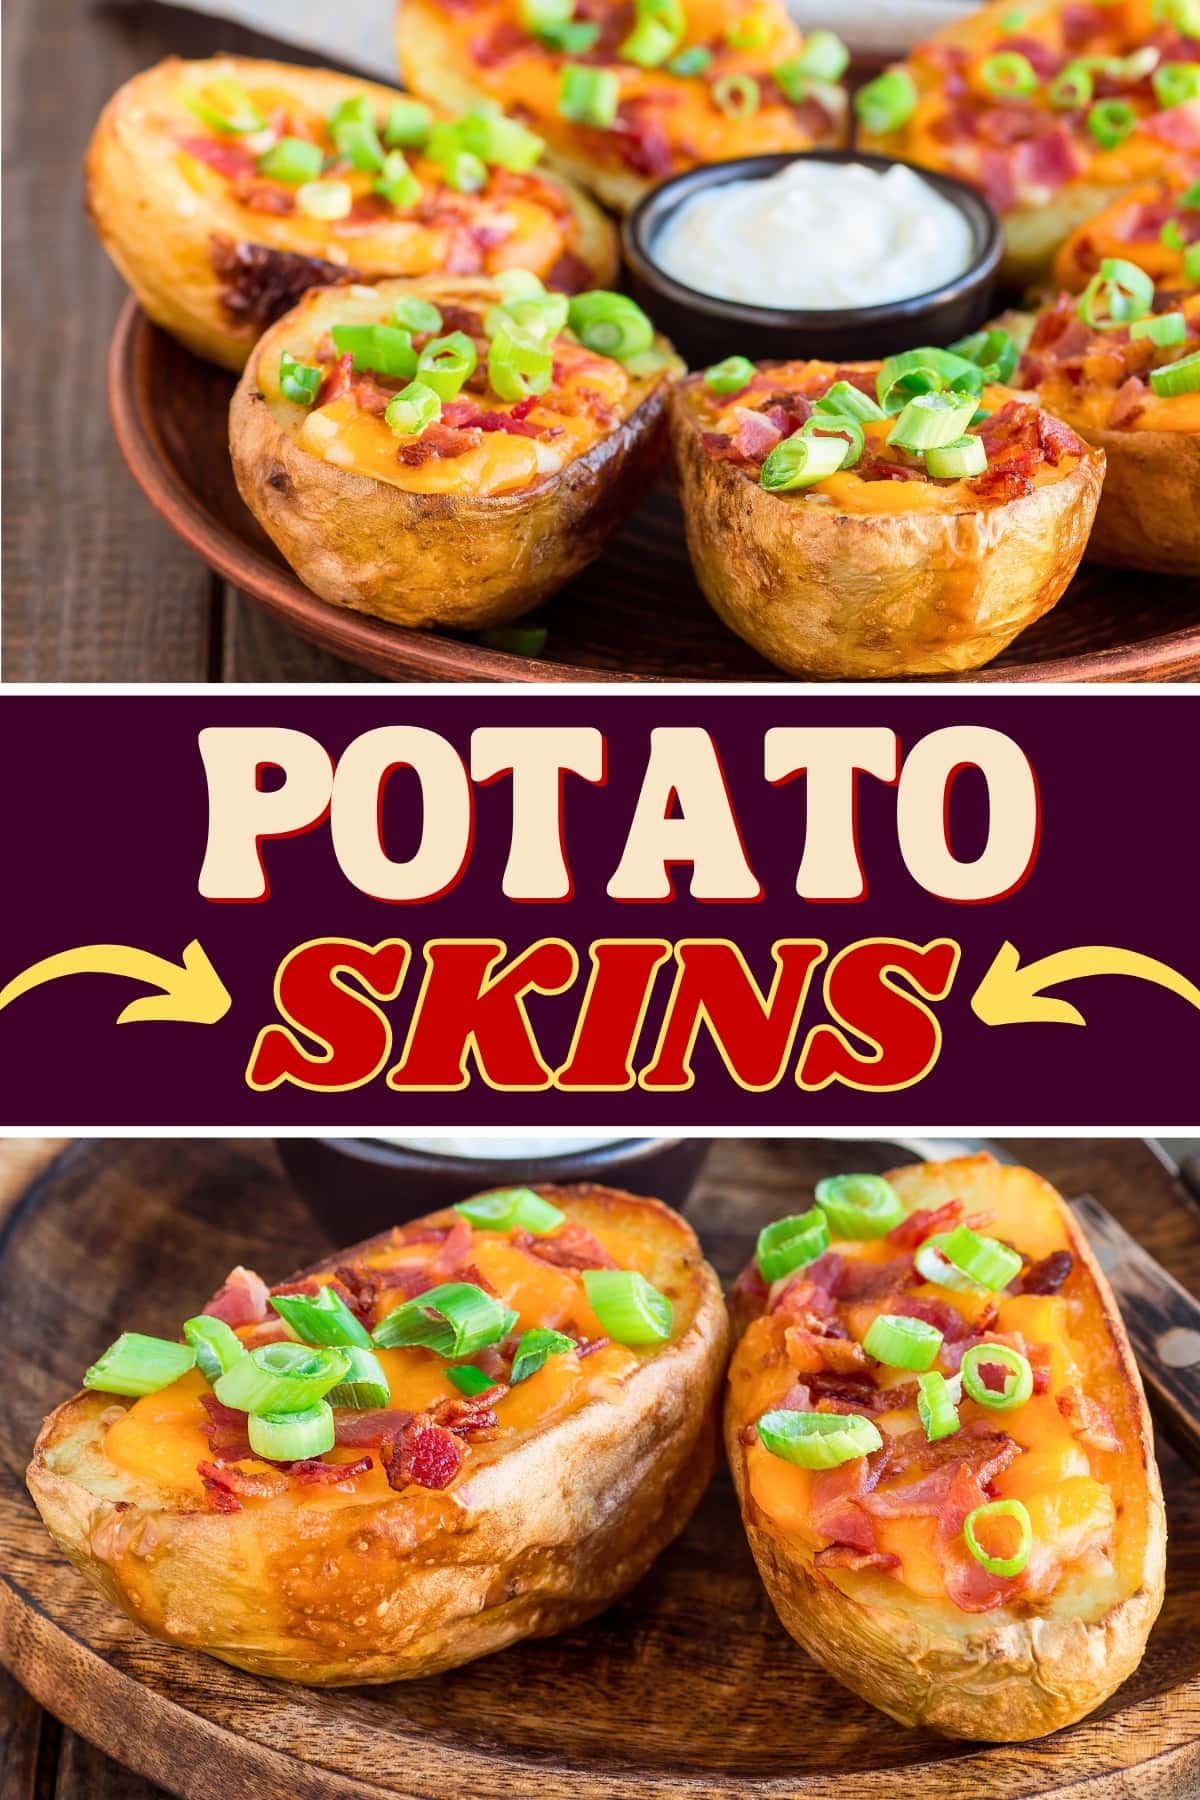 Potato skins